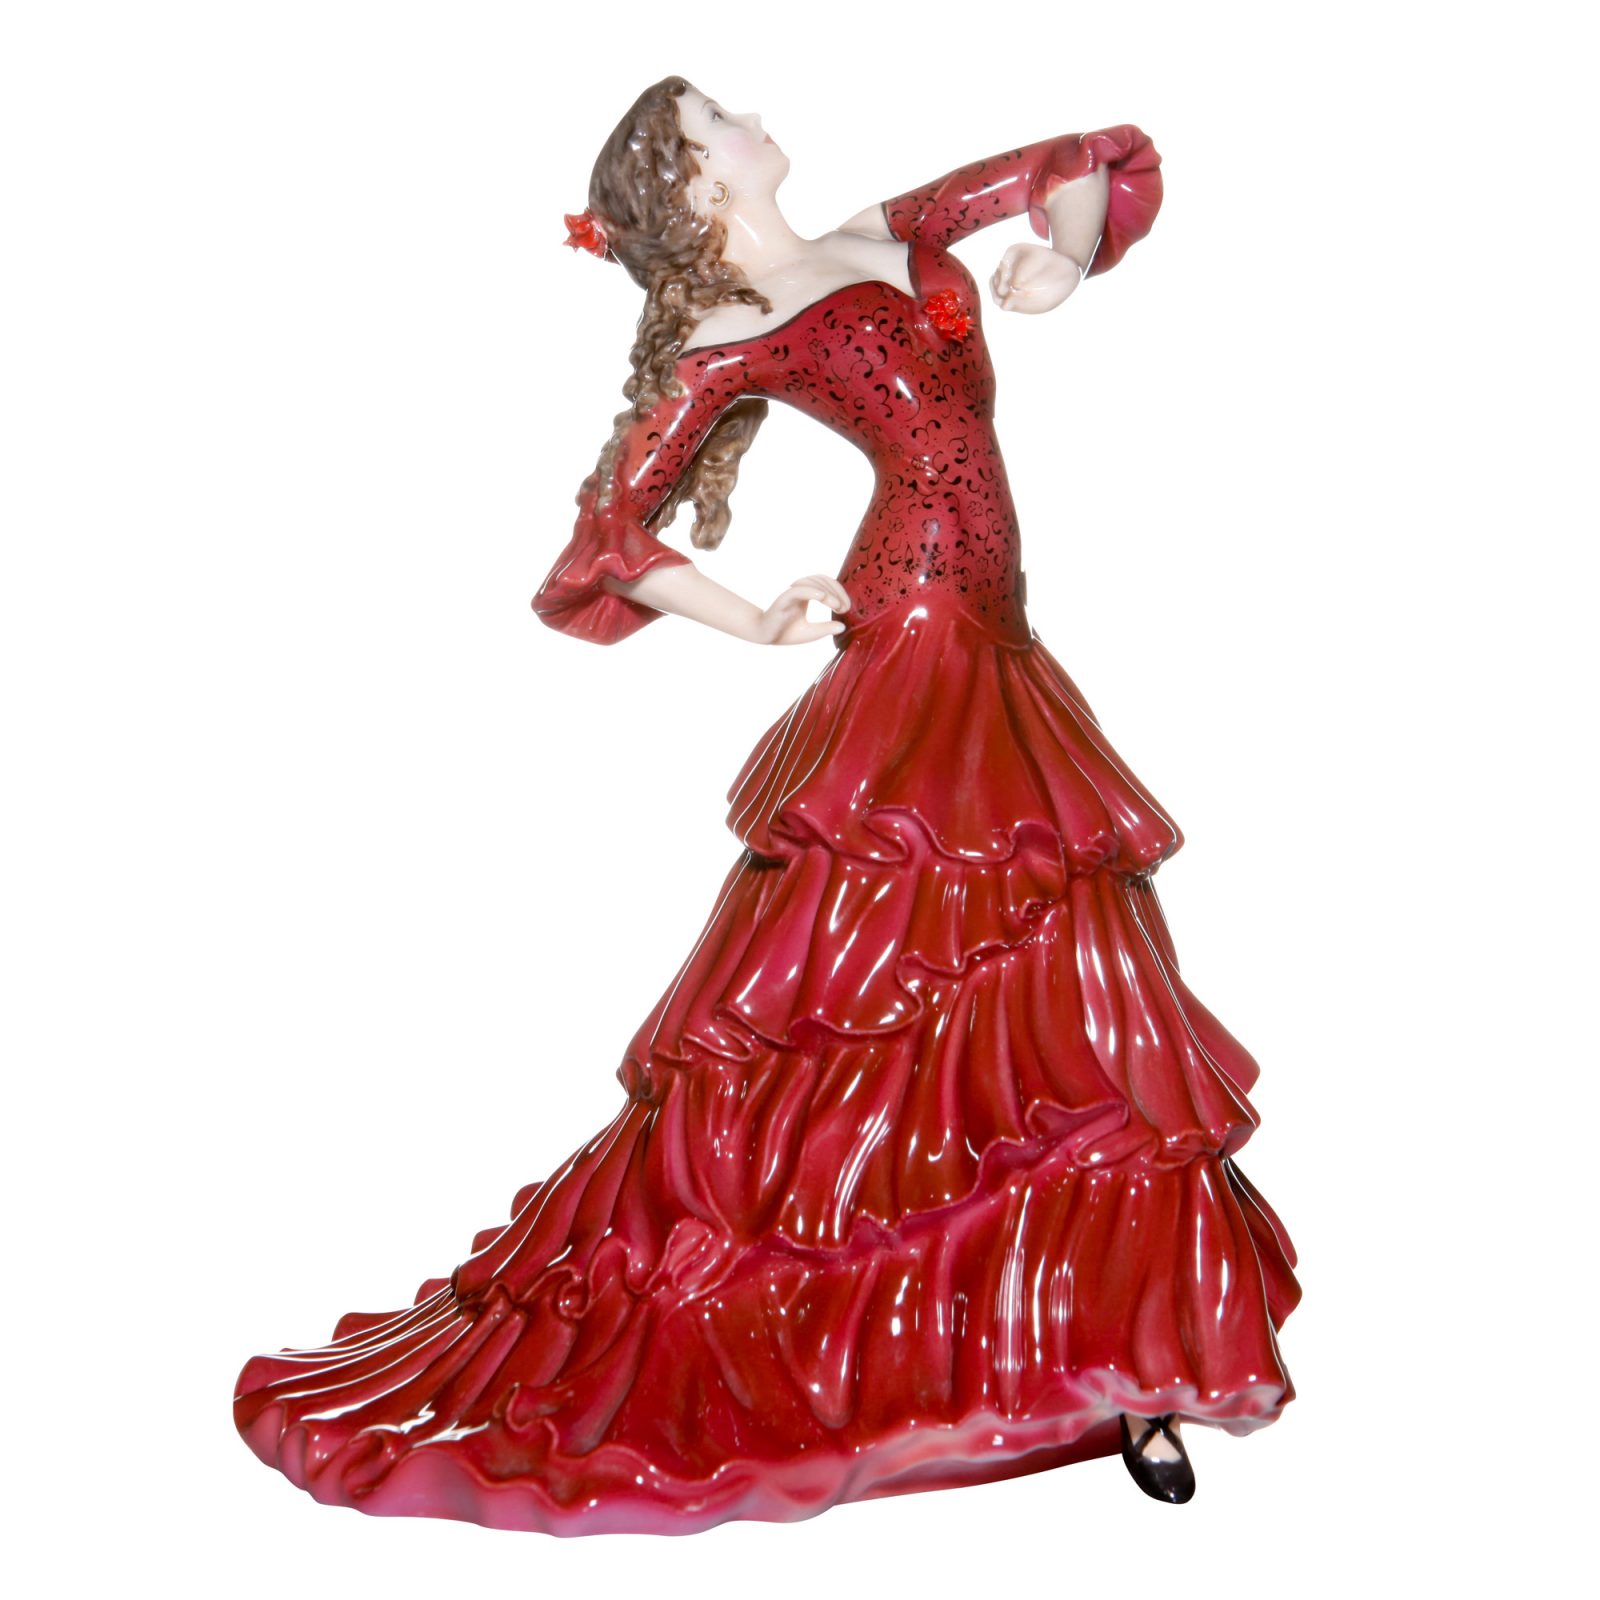 Bolero "A Passion For Dance" - Coalport Figurine